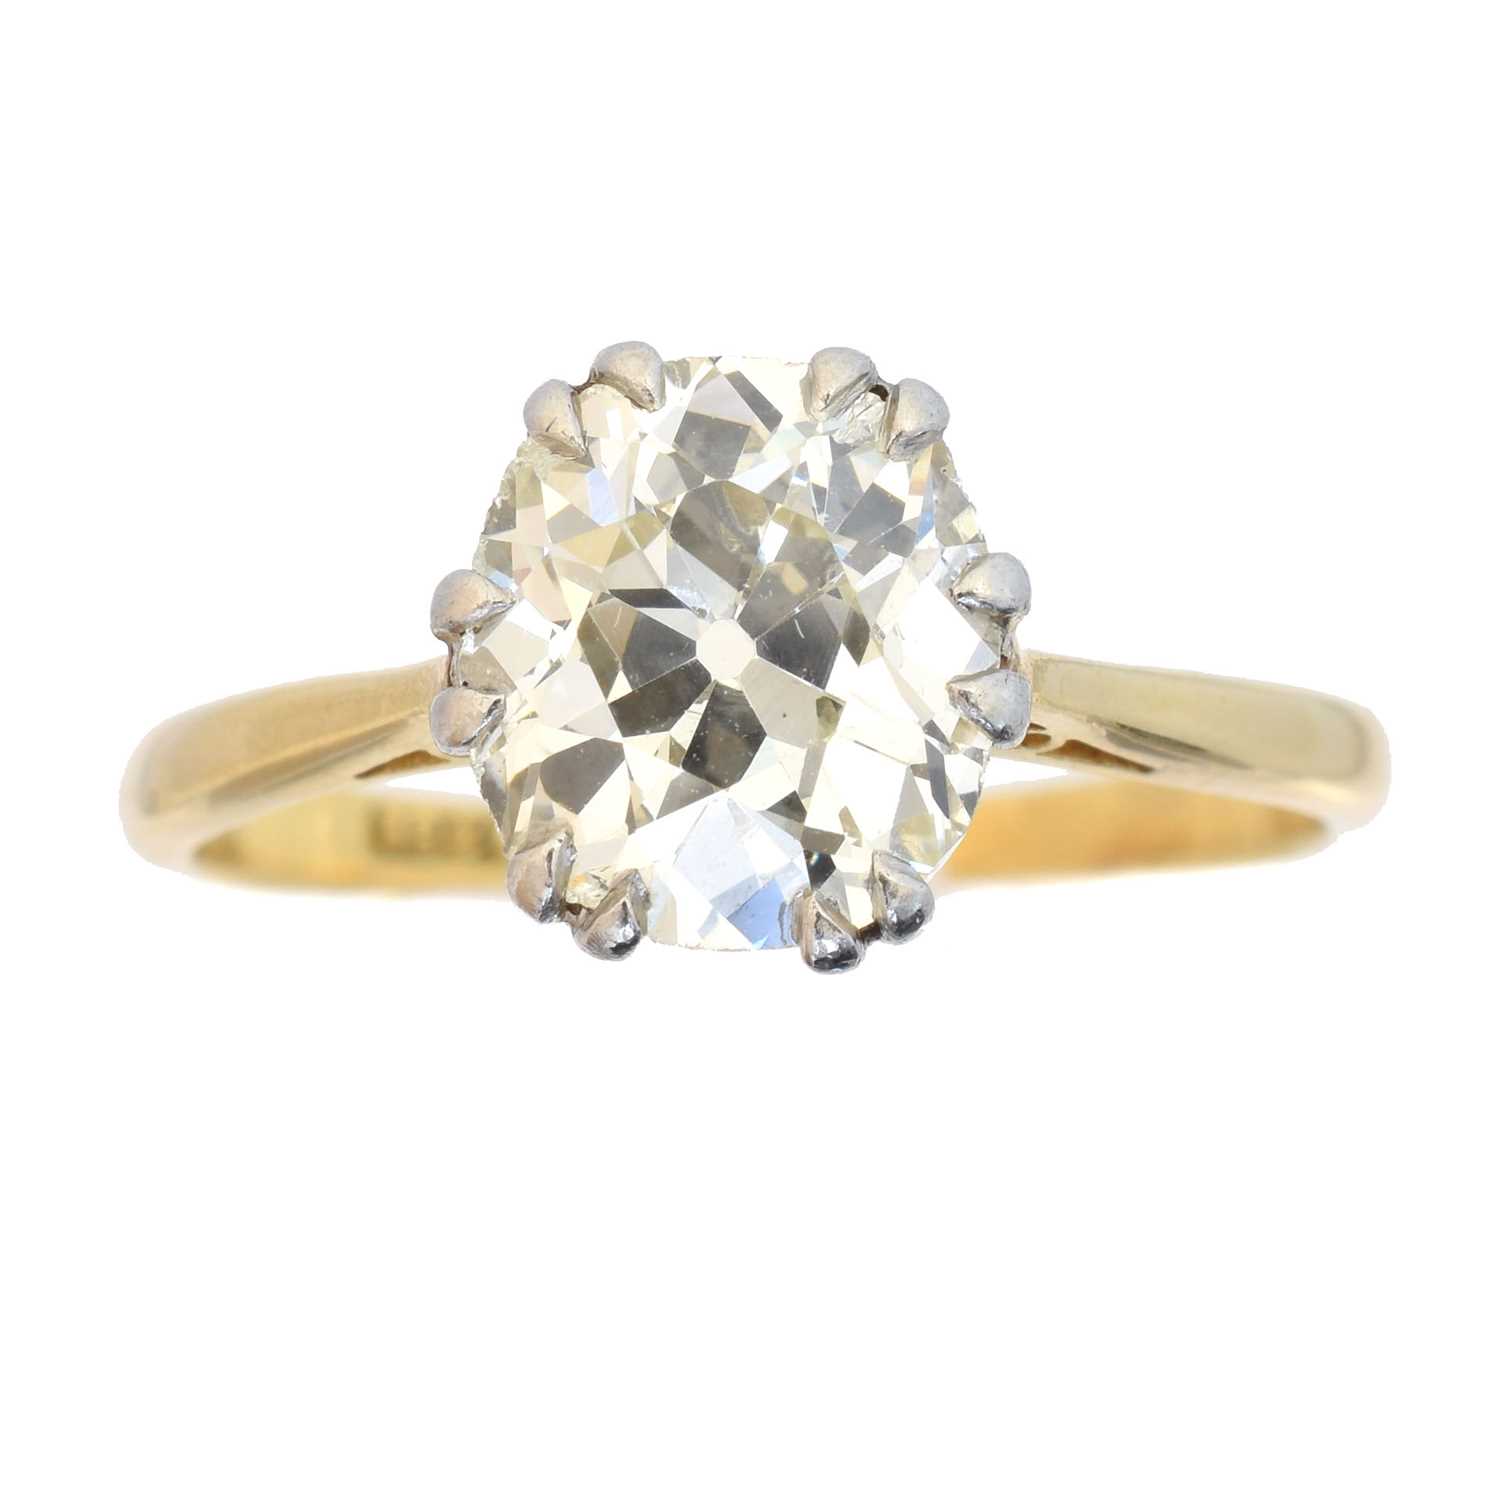 Lot A diamond single stone ring